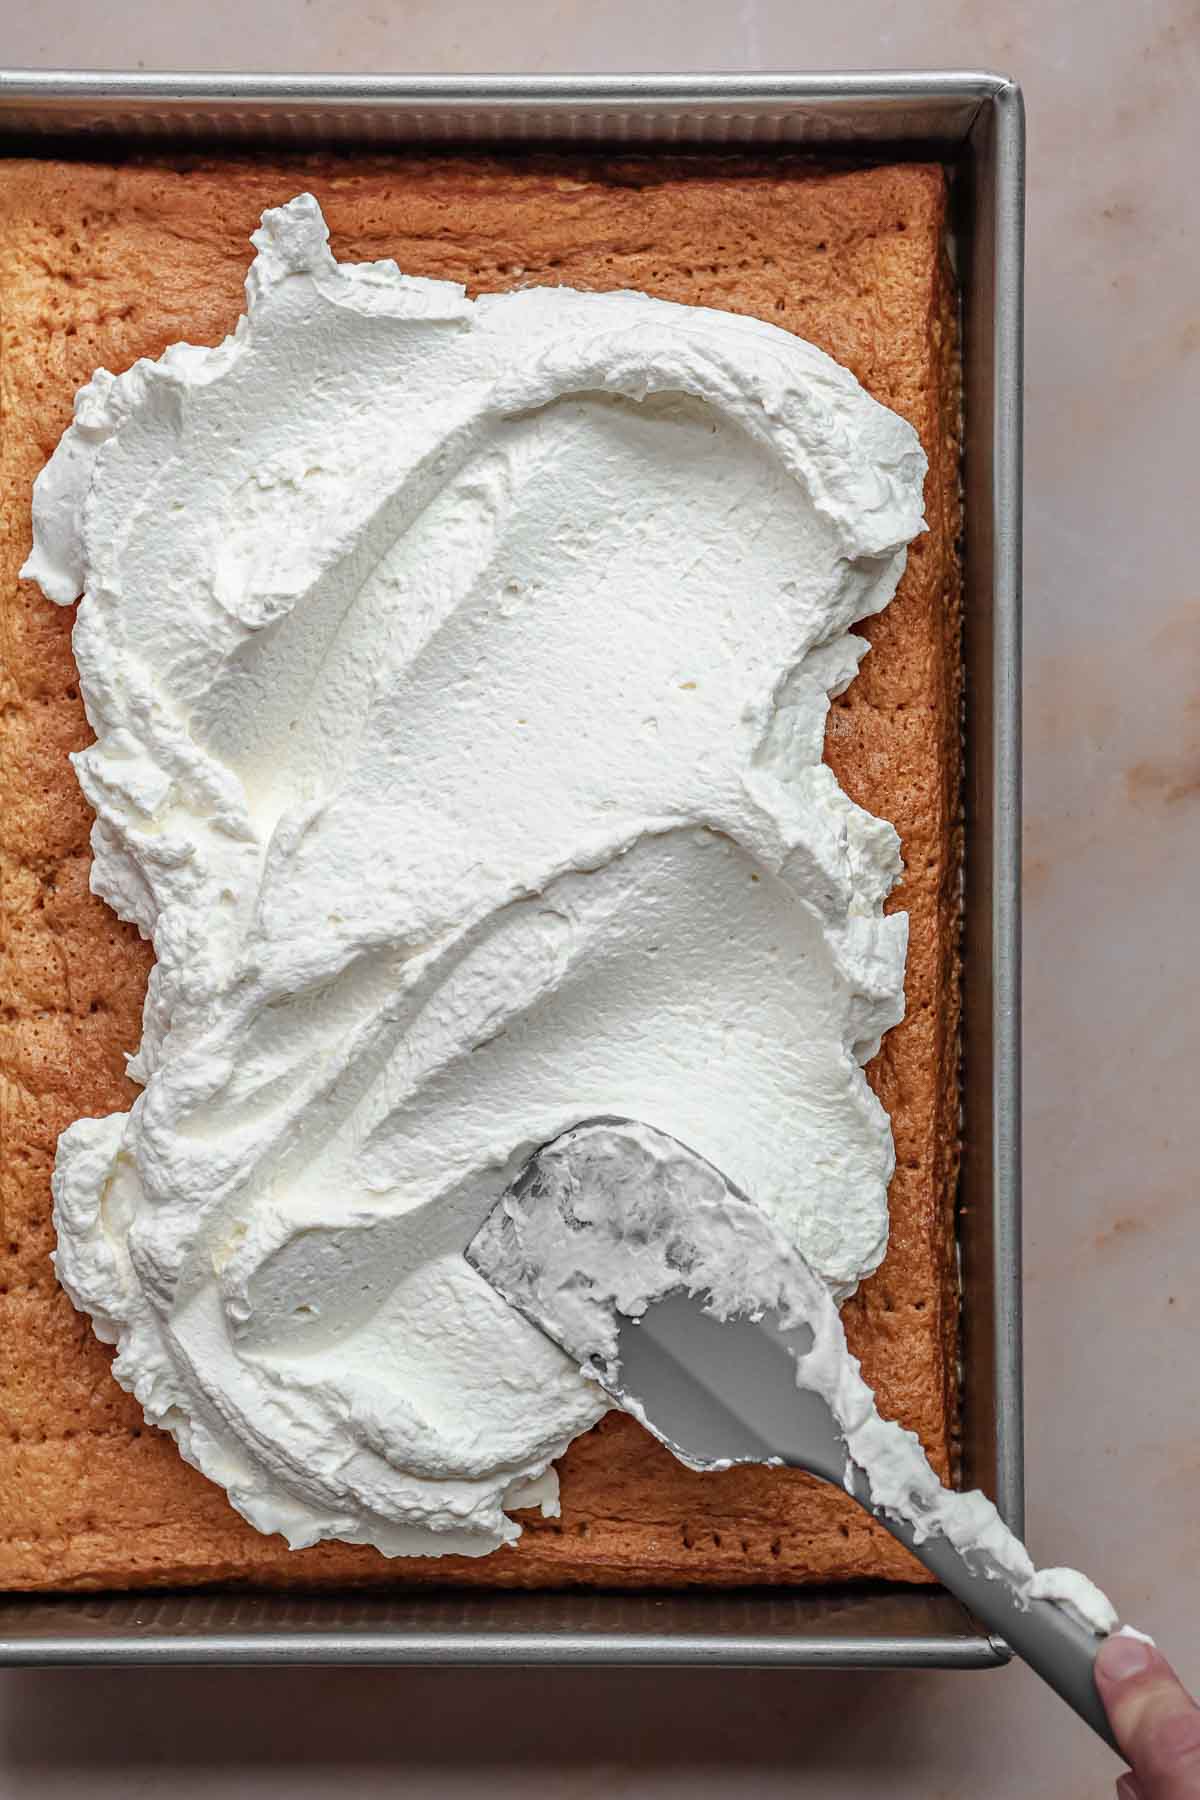 A spatula spreads fresh whipped cream onto the cake.